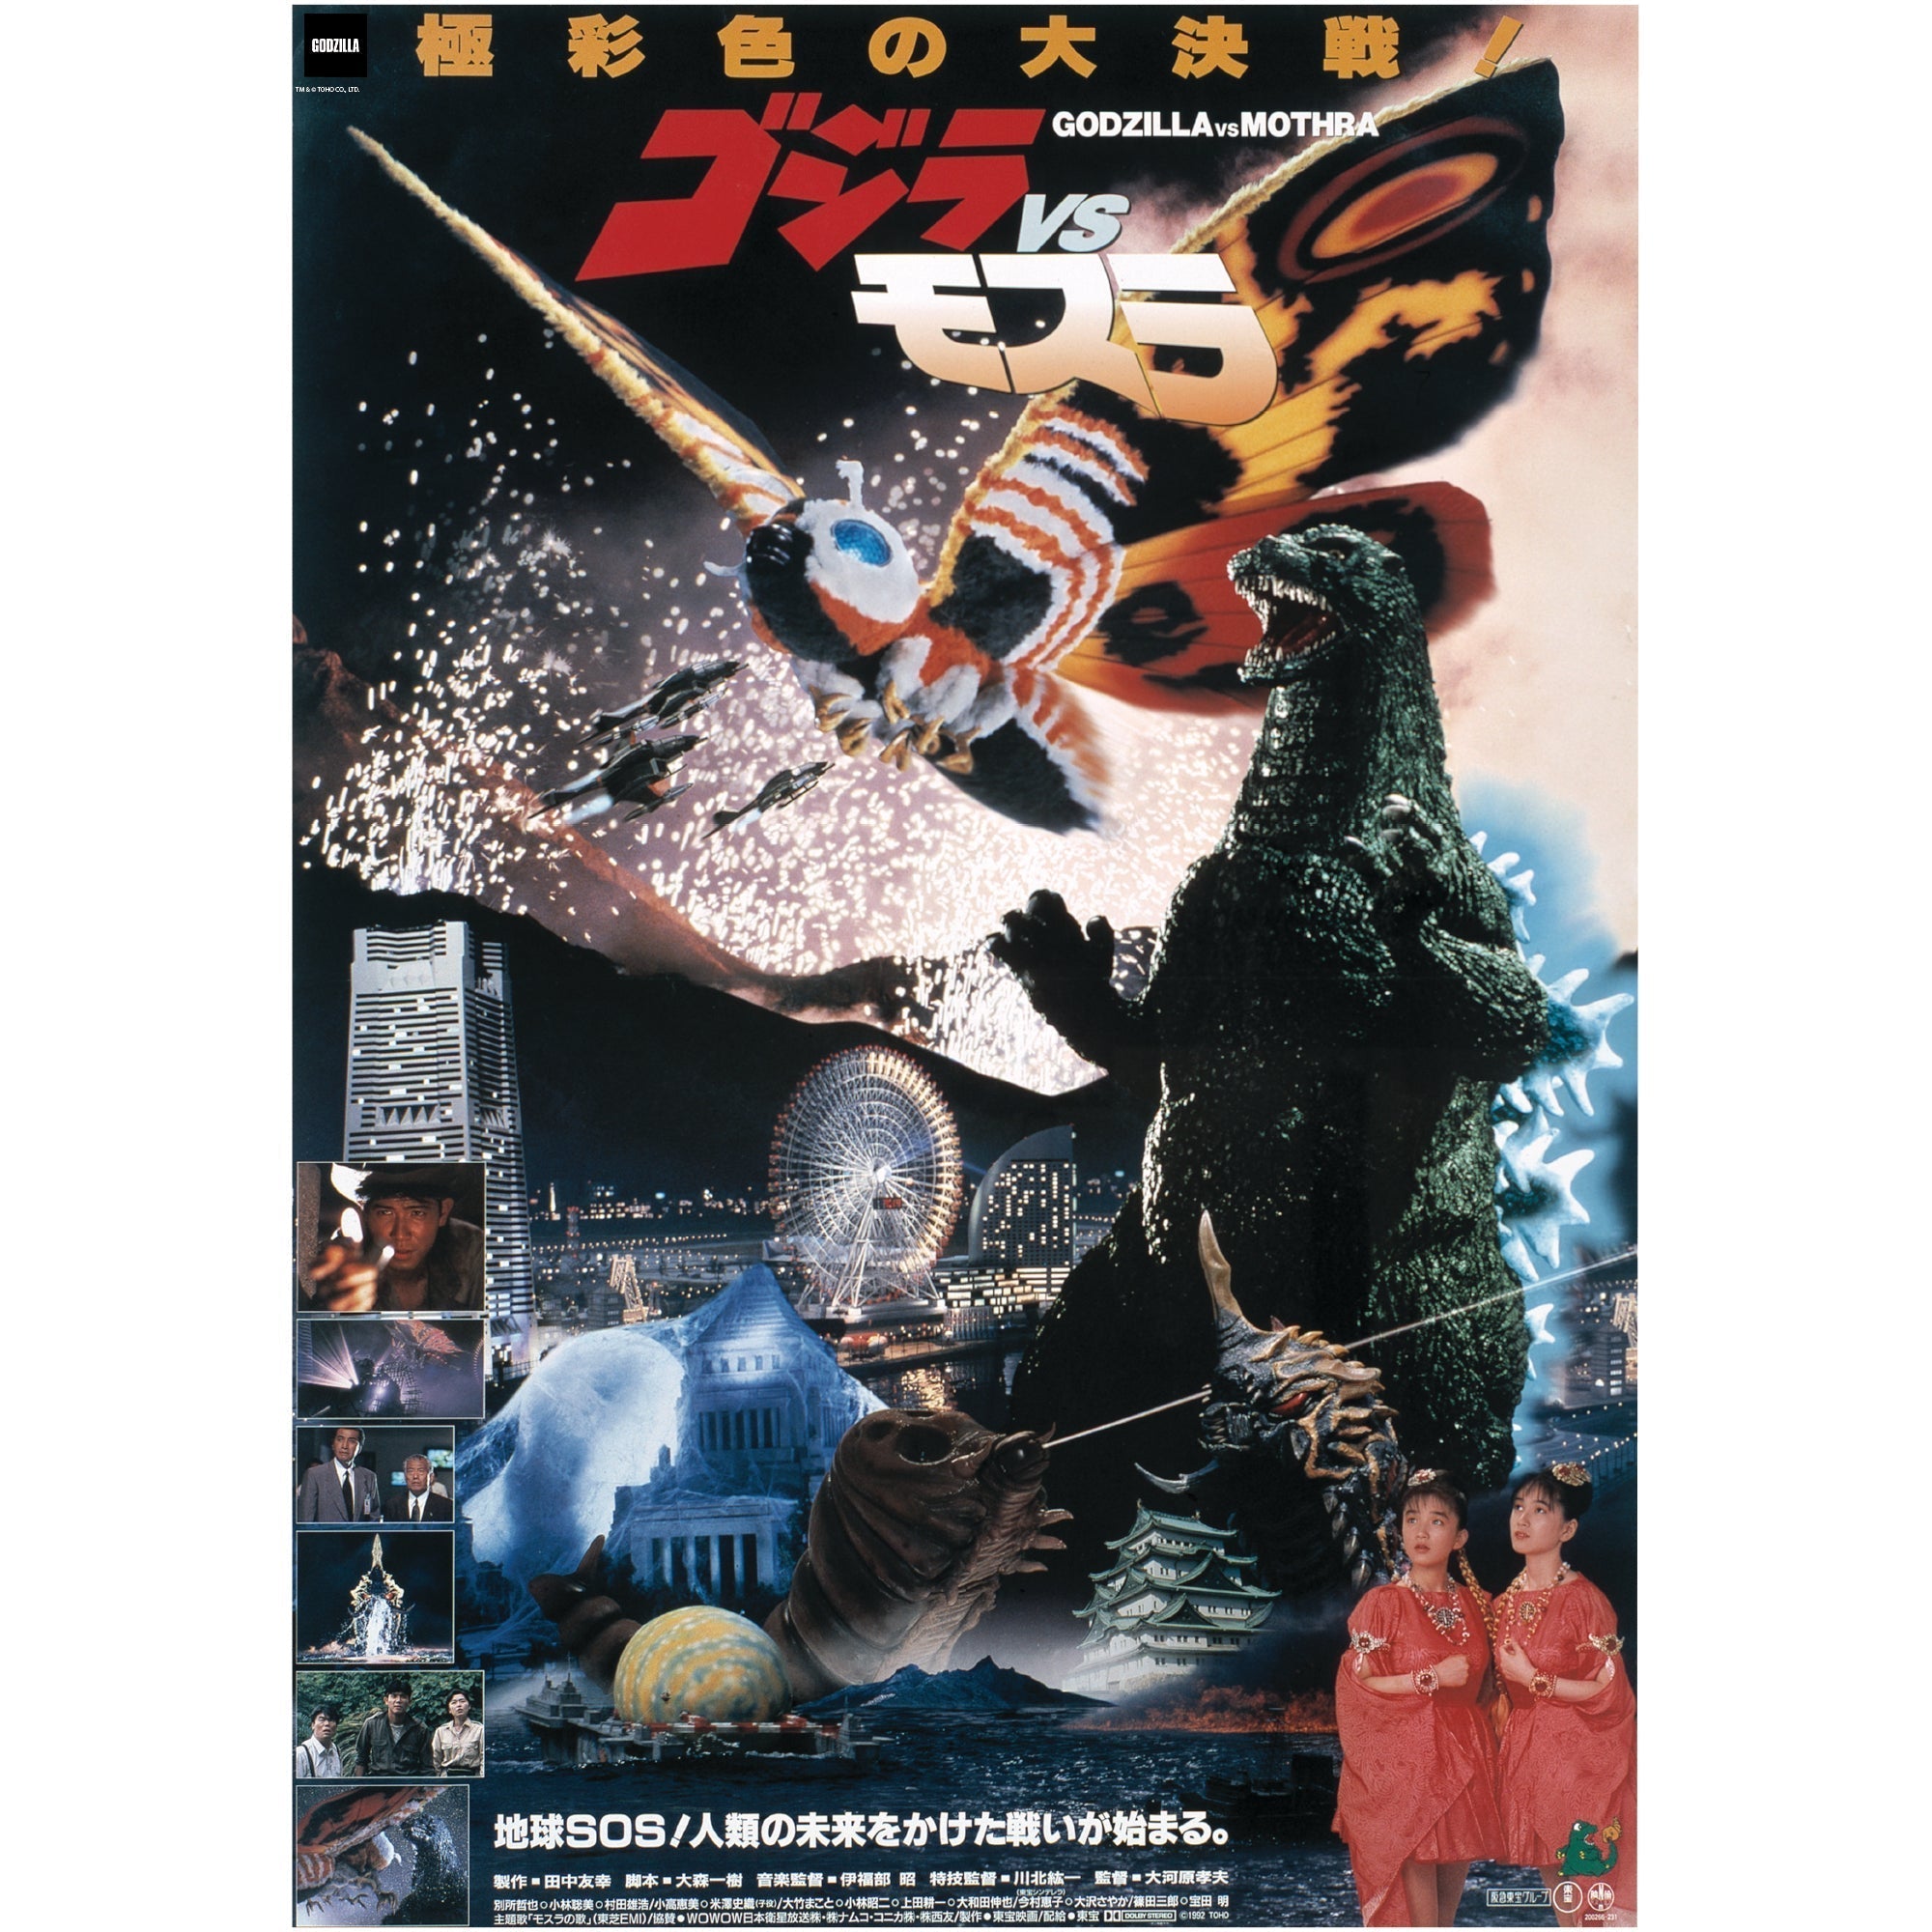 Godzilla: Godzilla vs Mothra (1992) Movie Poster Mural - Officially Licensed Toho Removable Adhesive Decal